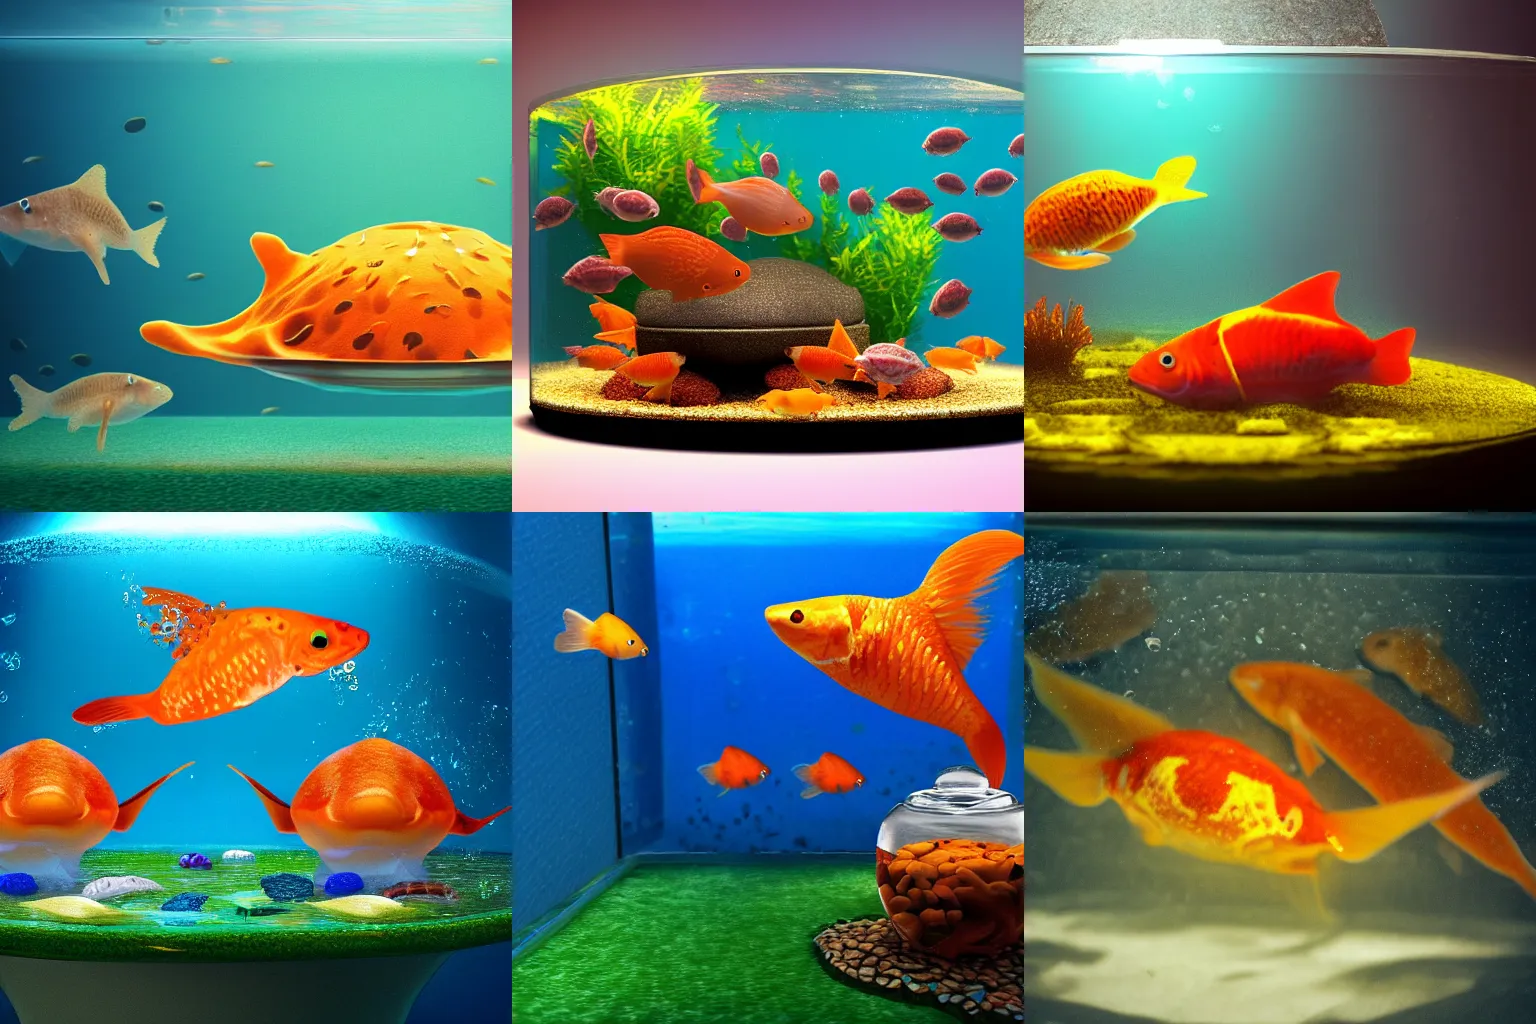 Prompt: miniature stingrays swimming around small fishbowl with goldfish, 8k surreal trending on artstationHD